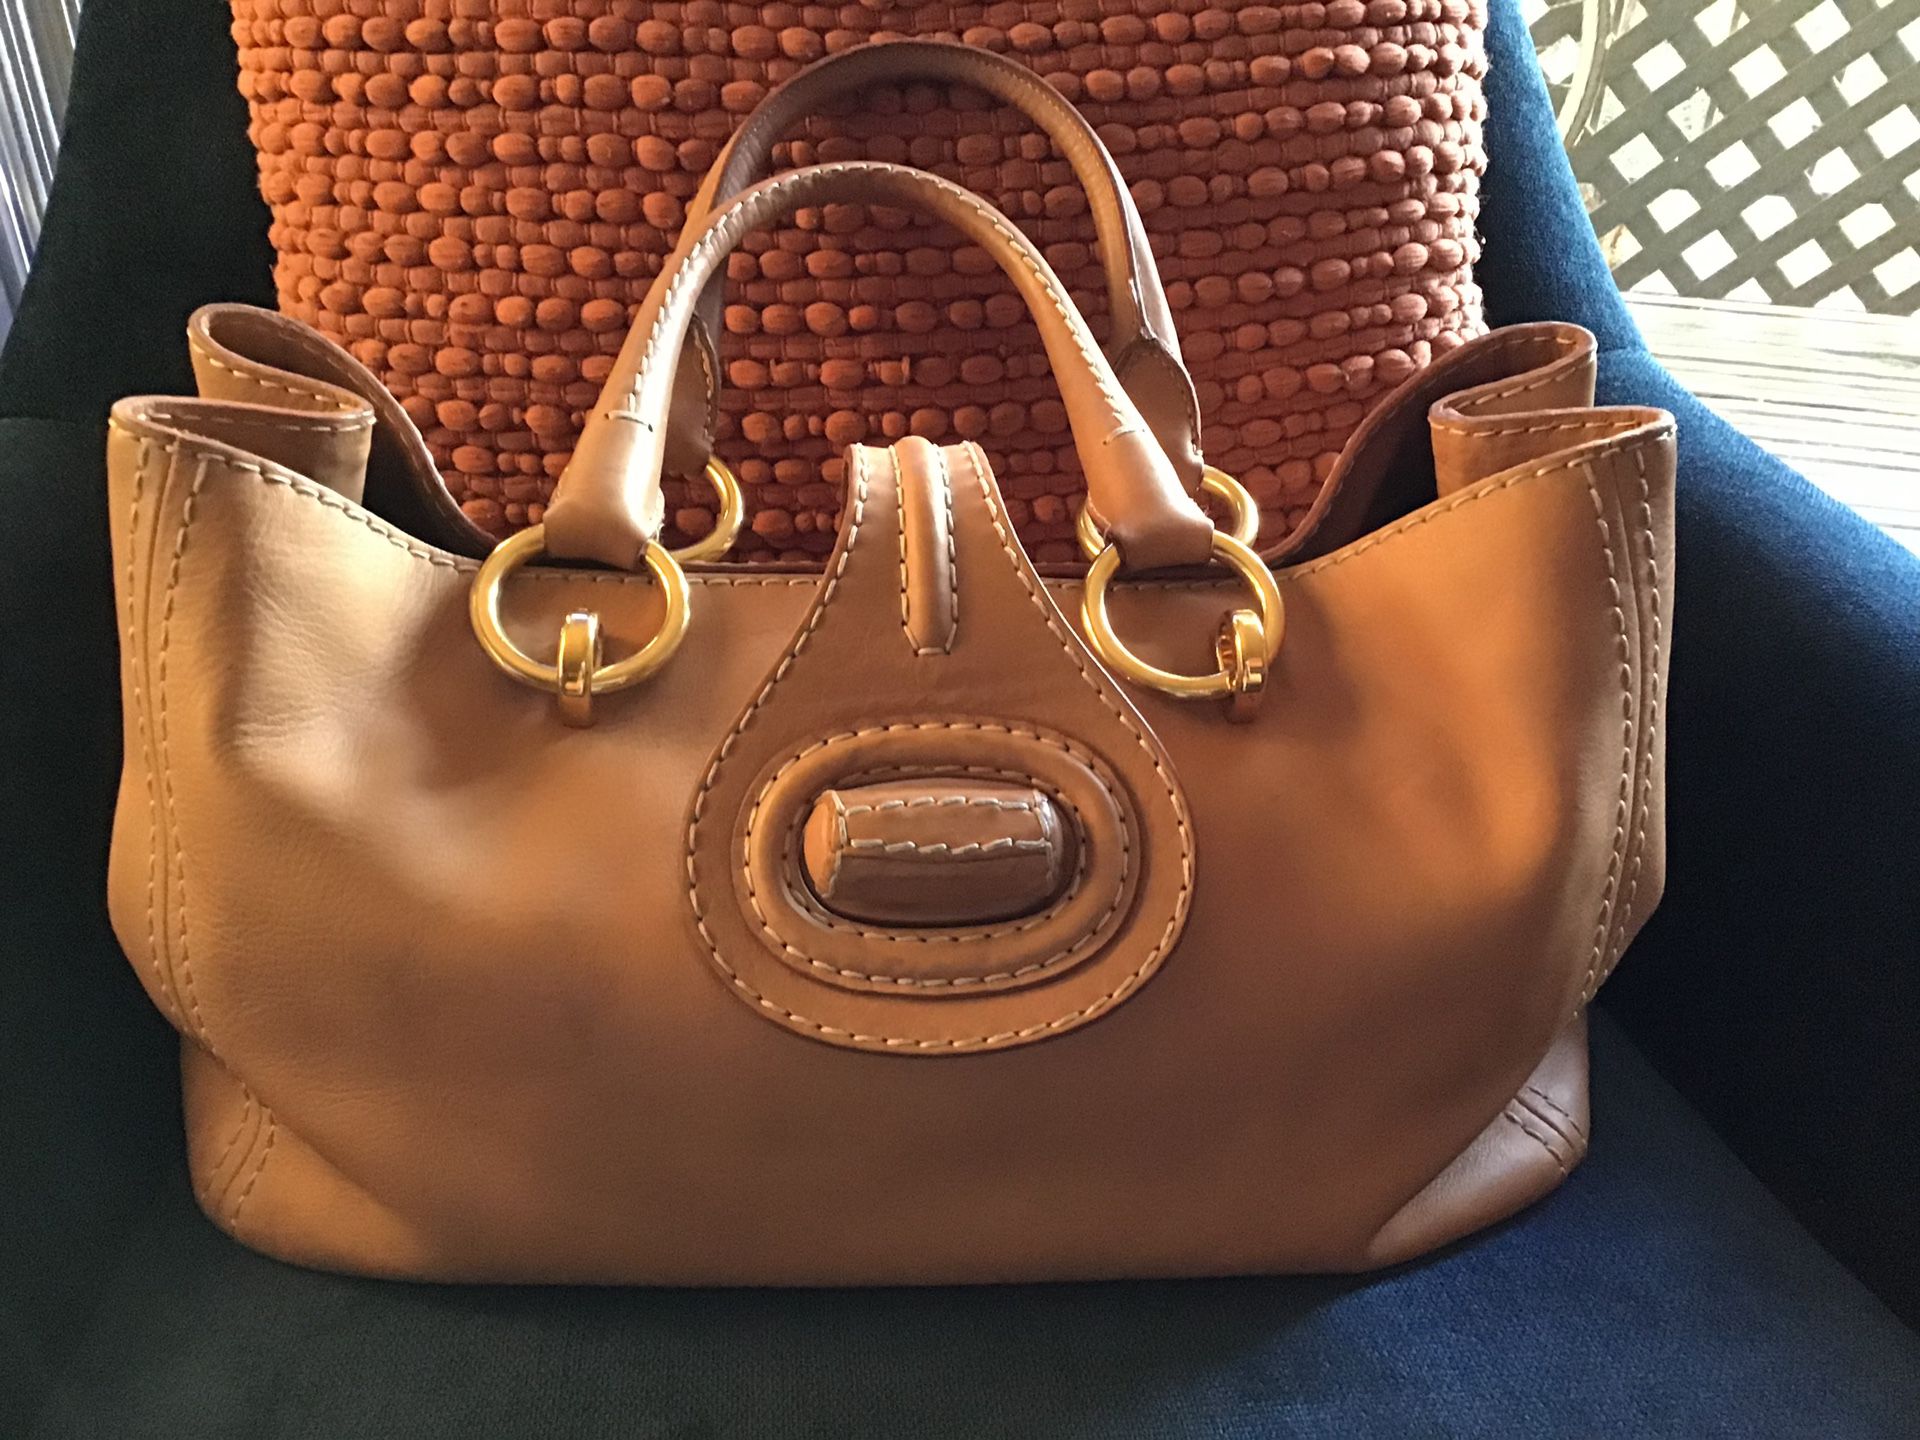 $2000 Prada Tan Leather Satchel Bag Handbag Purse